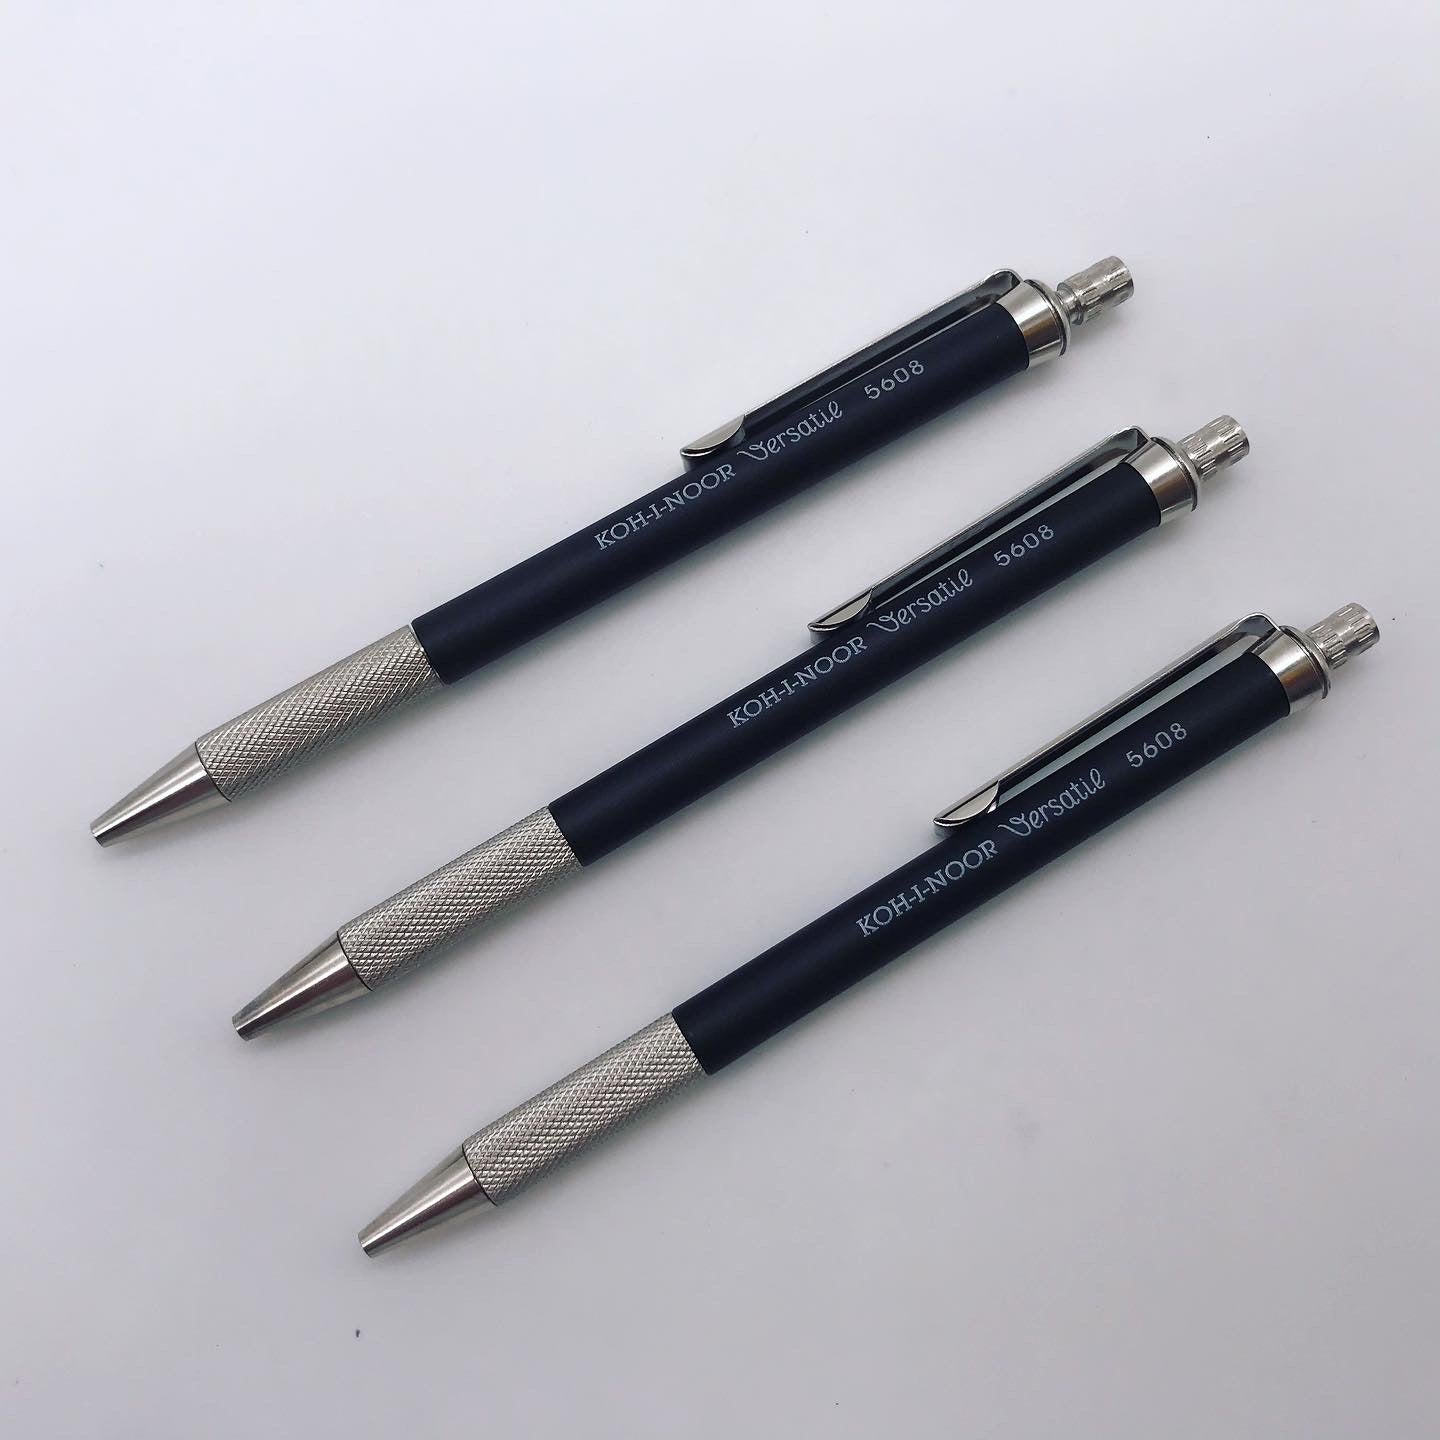 Mechanical Pencil - Slick Black